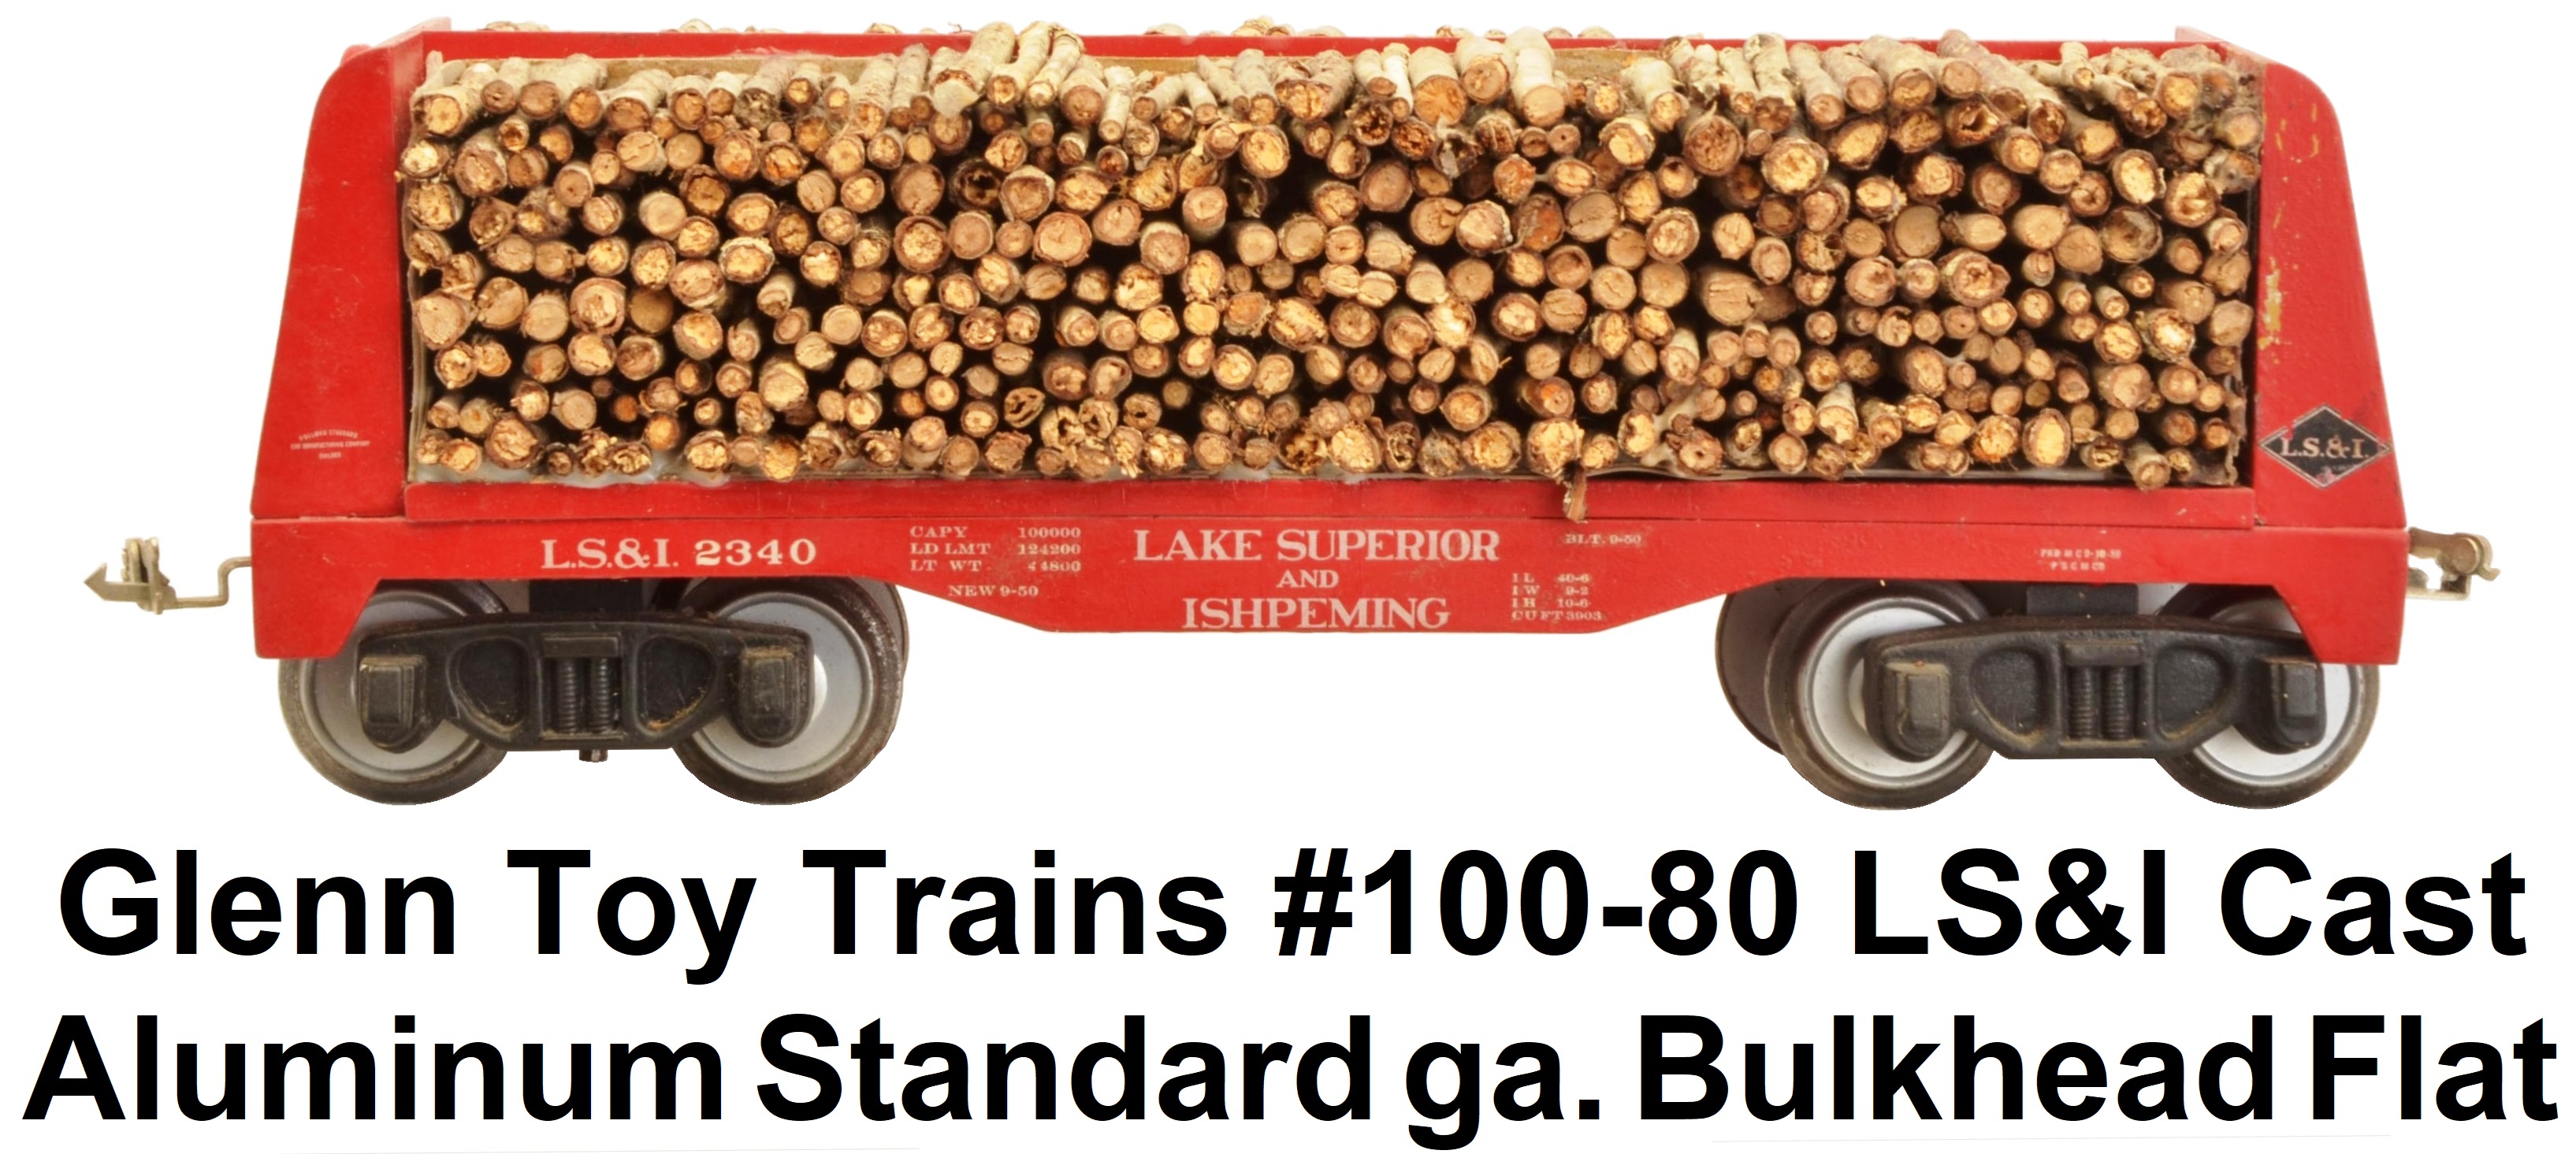 Glenn Toy Trains Standard gauge #100-80 Cast Aluminum Red Lake Superior & Ishpeming Bulk Head flat car with Wood load